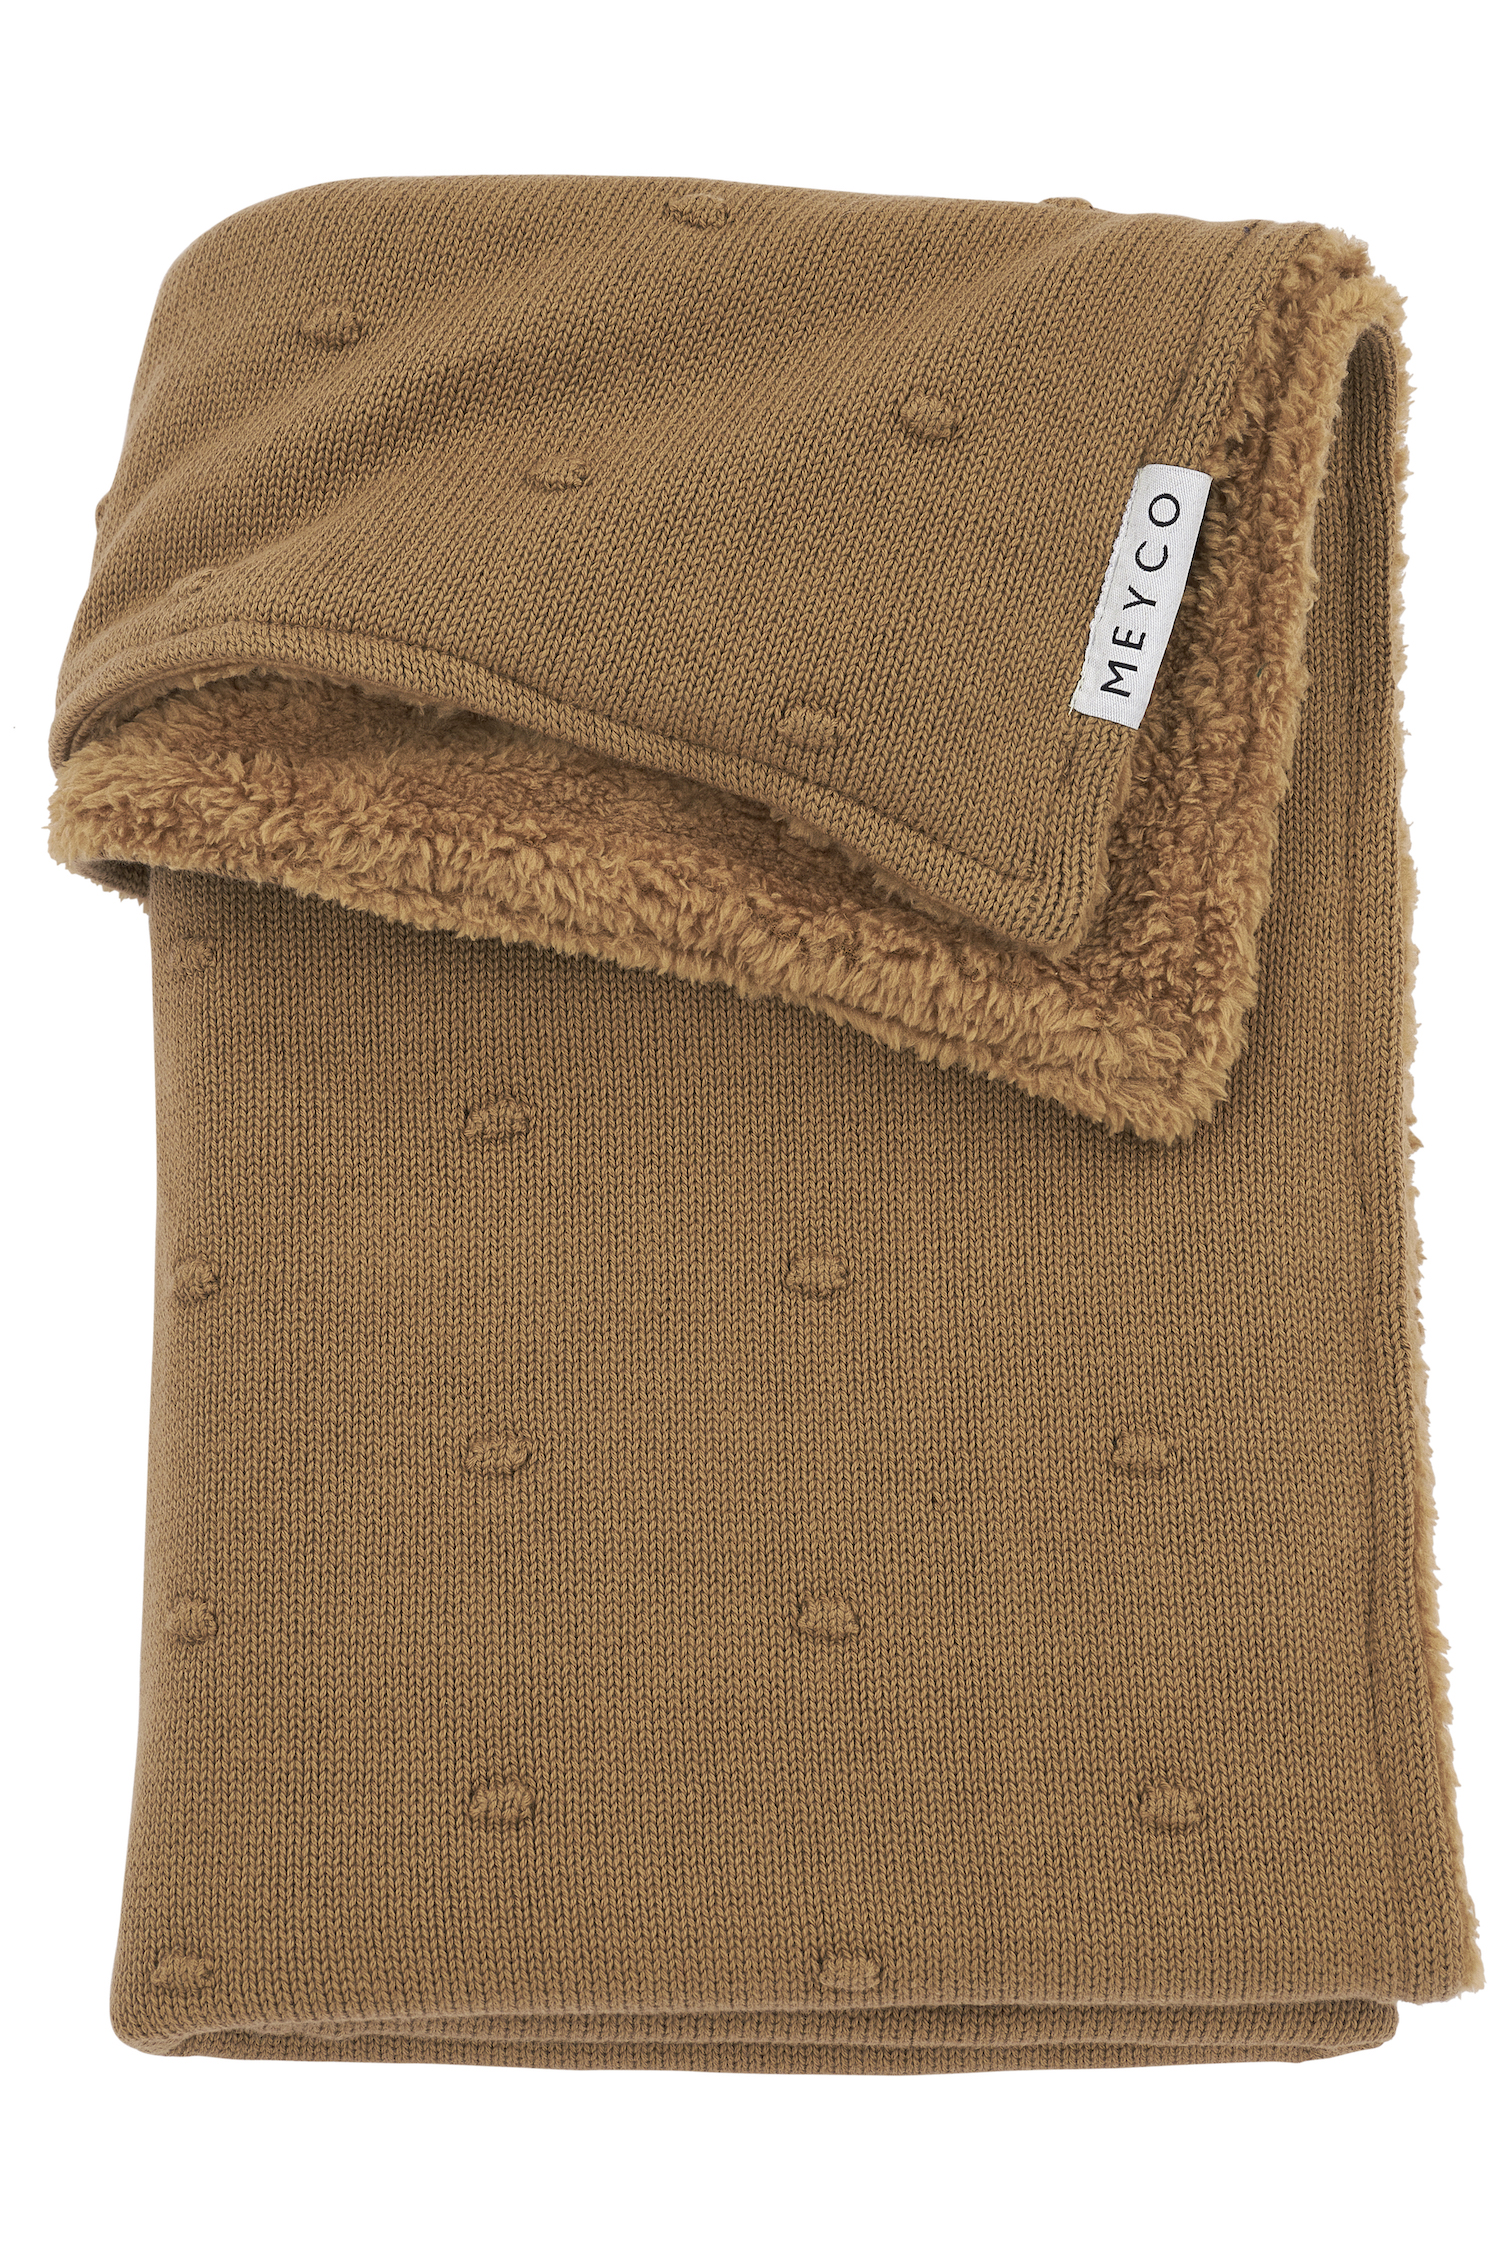 Ledikant deken Mini Knots teddy - toffee - 100x150cm